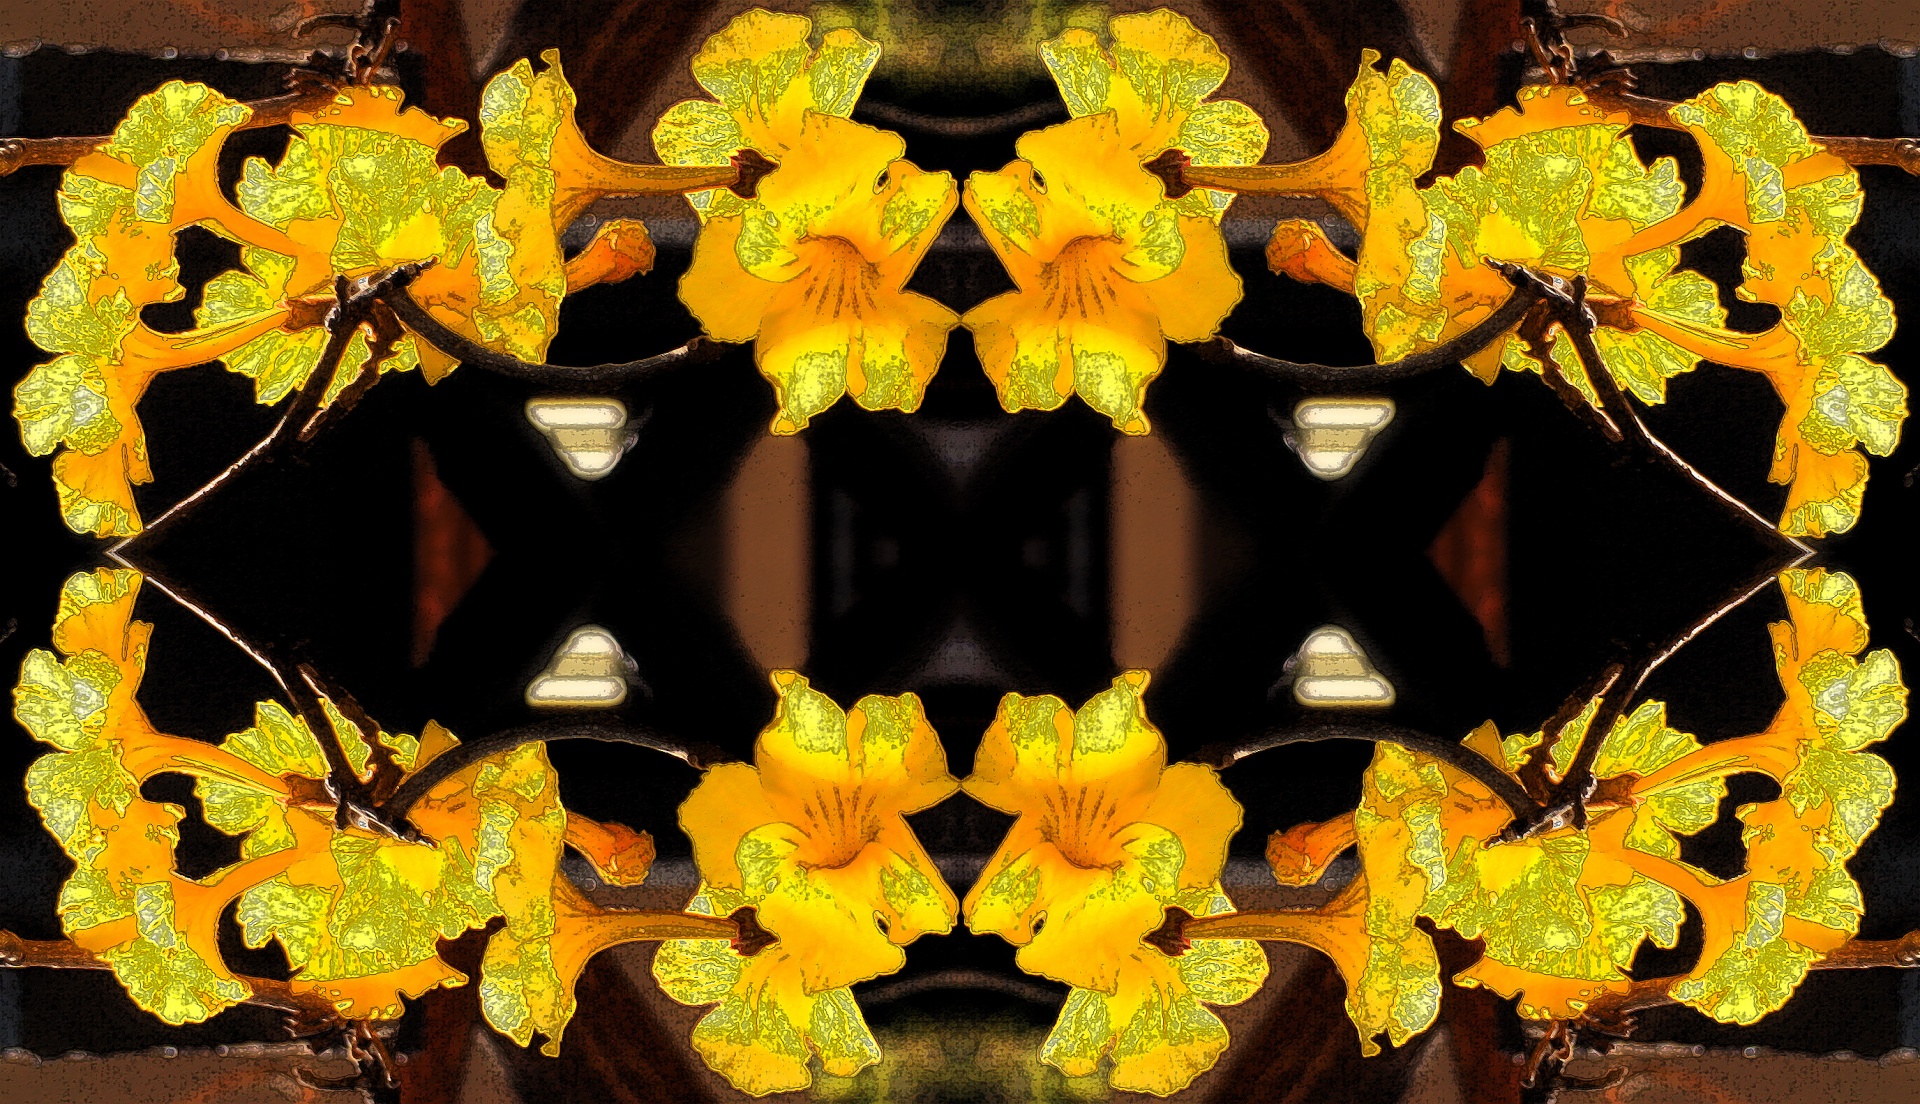 flowers yellow trumpet shaped free photo